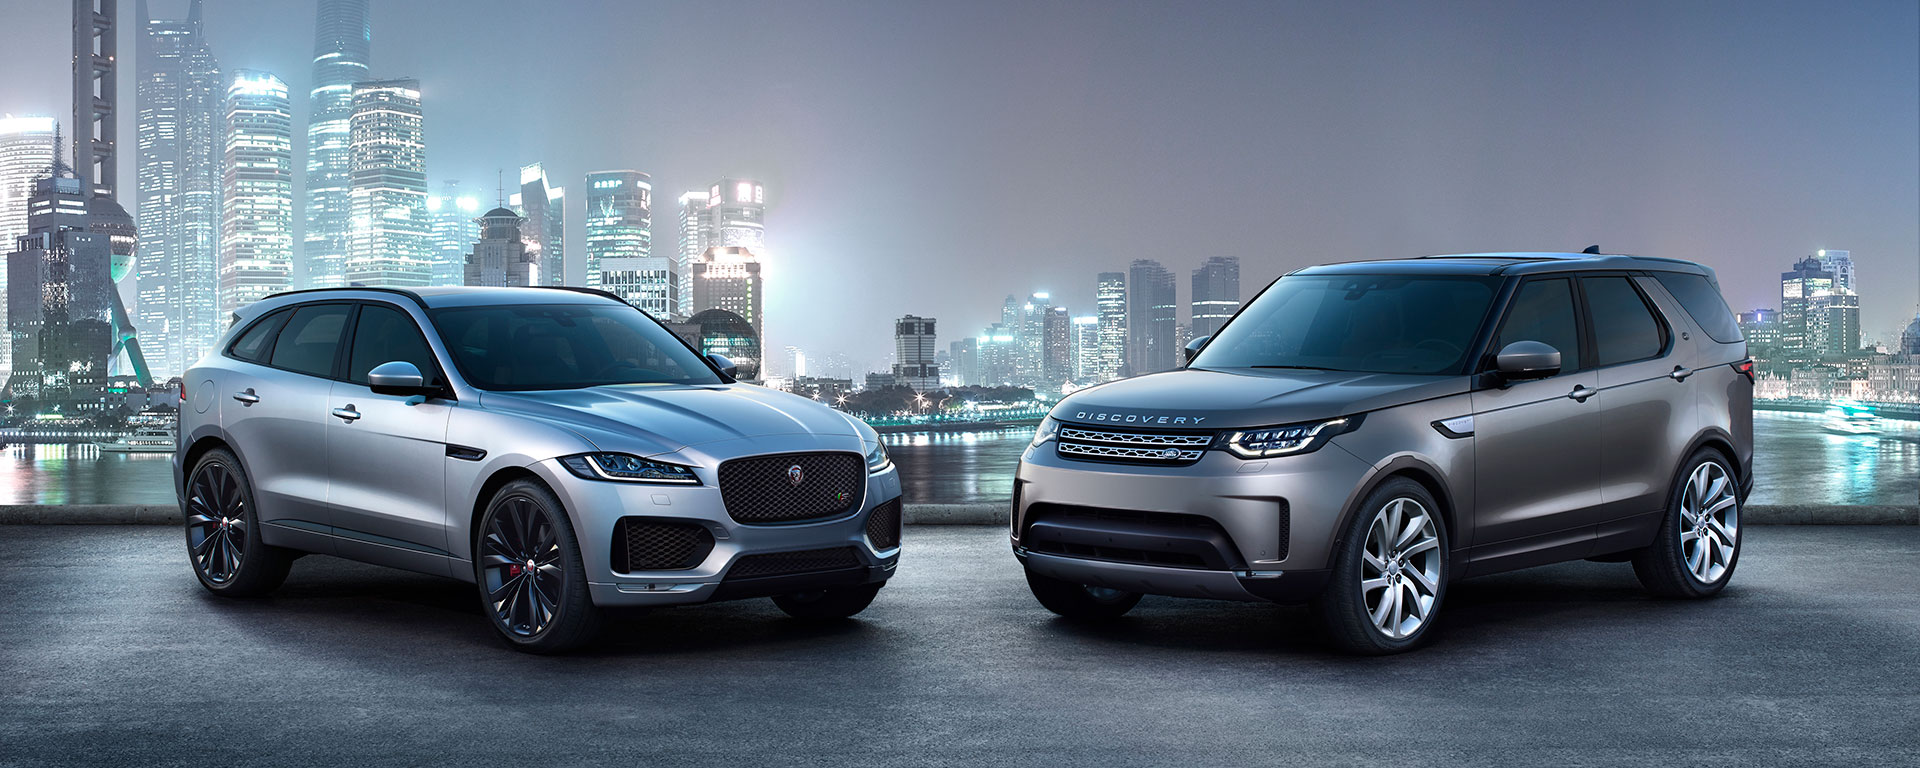 2020 Jaguar Land Rover